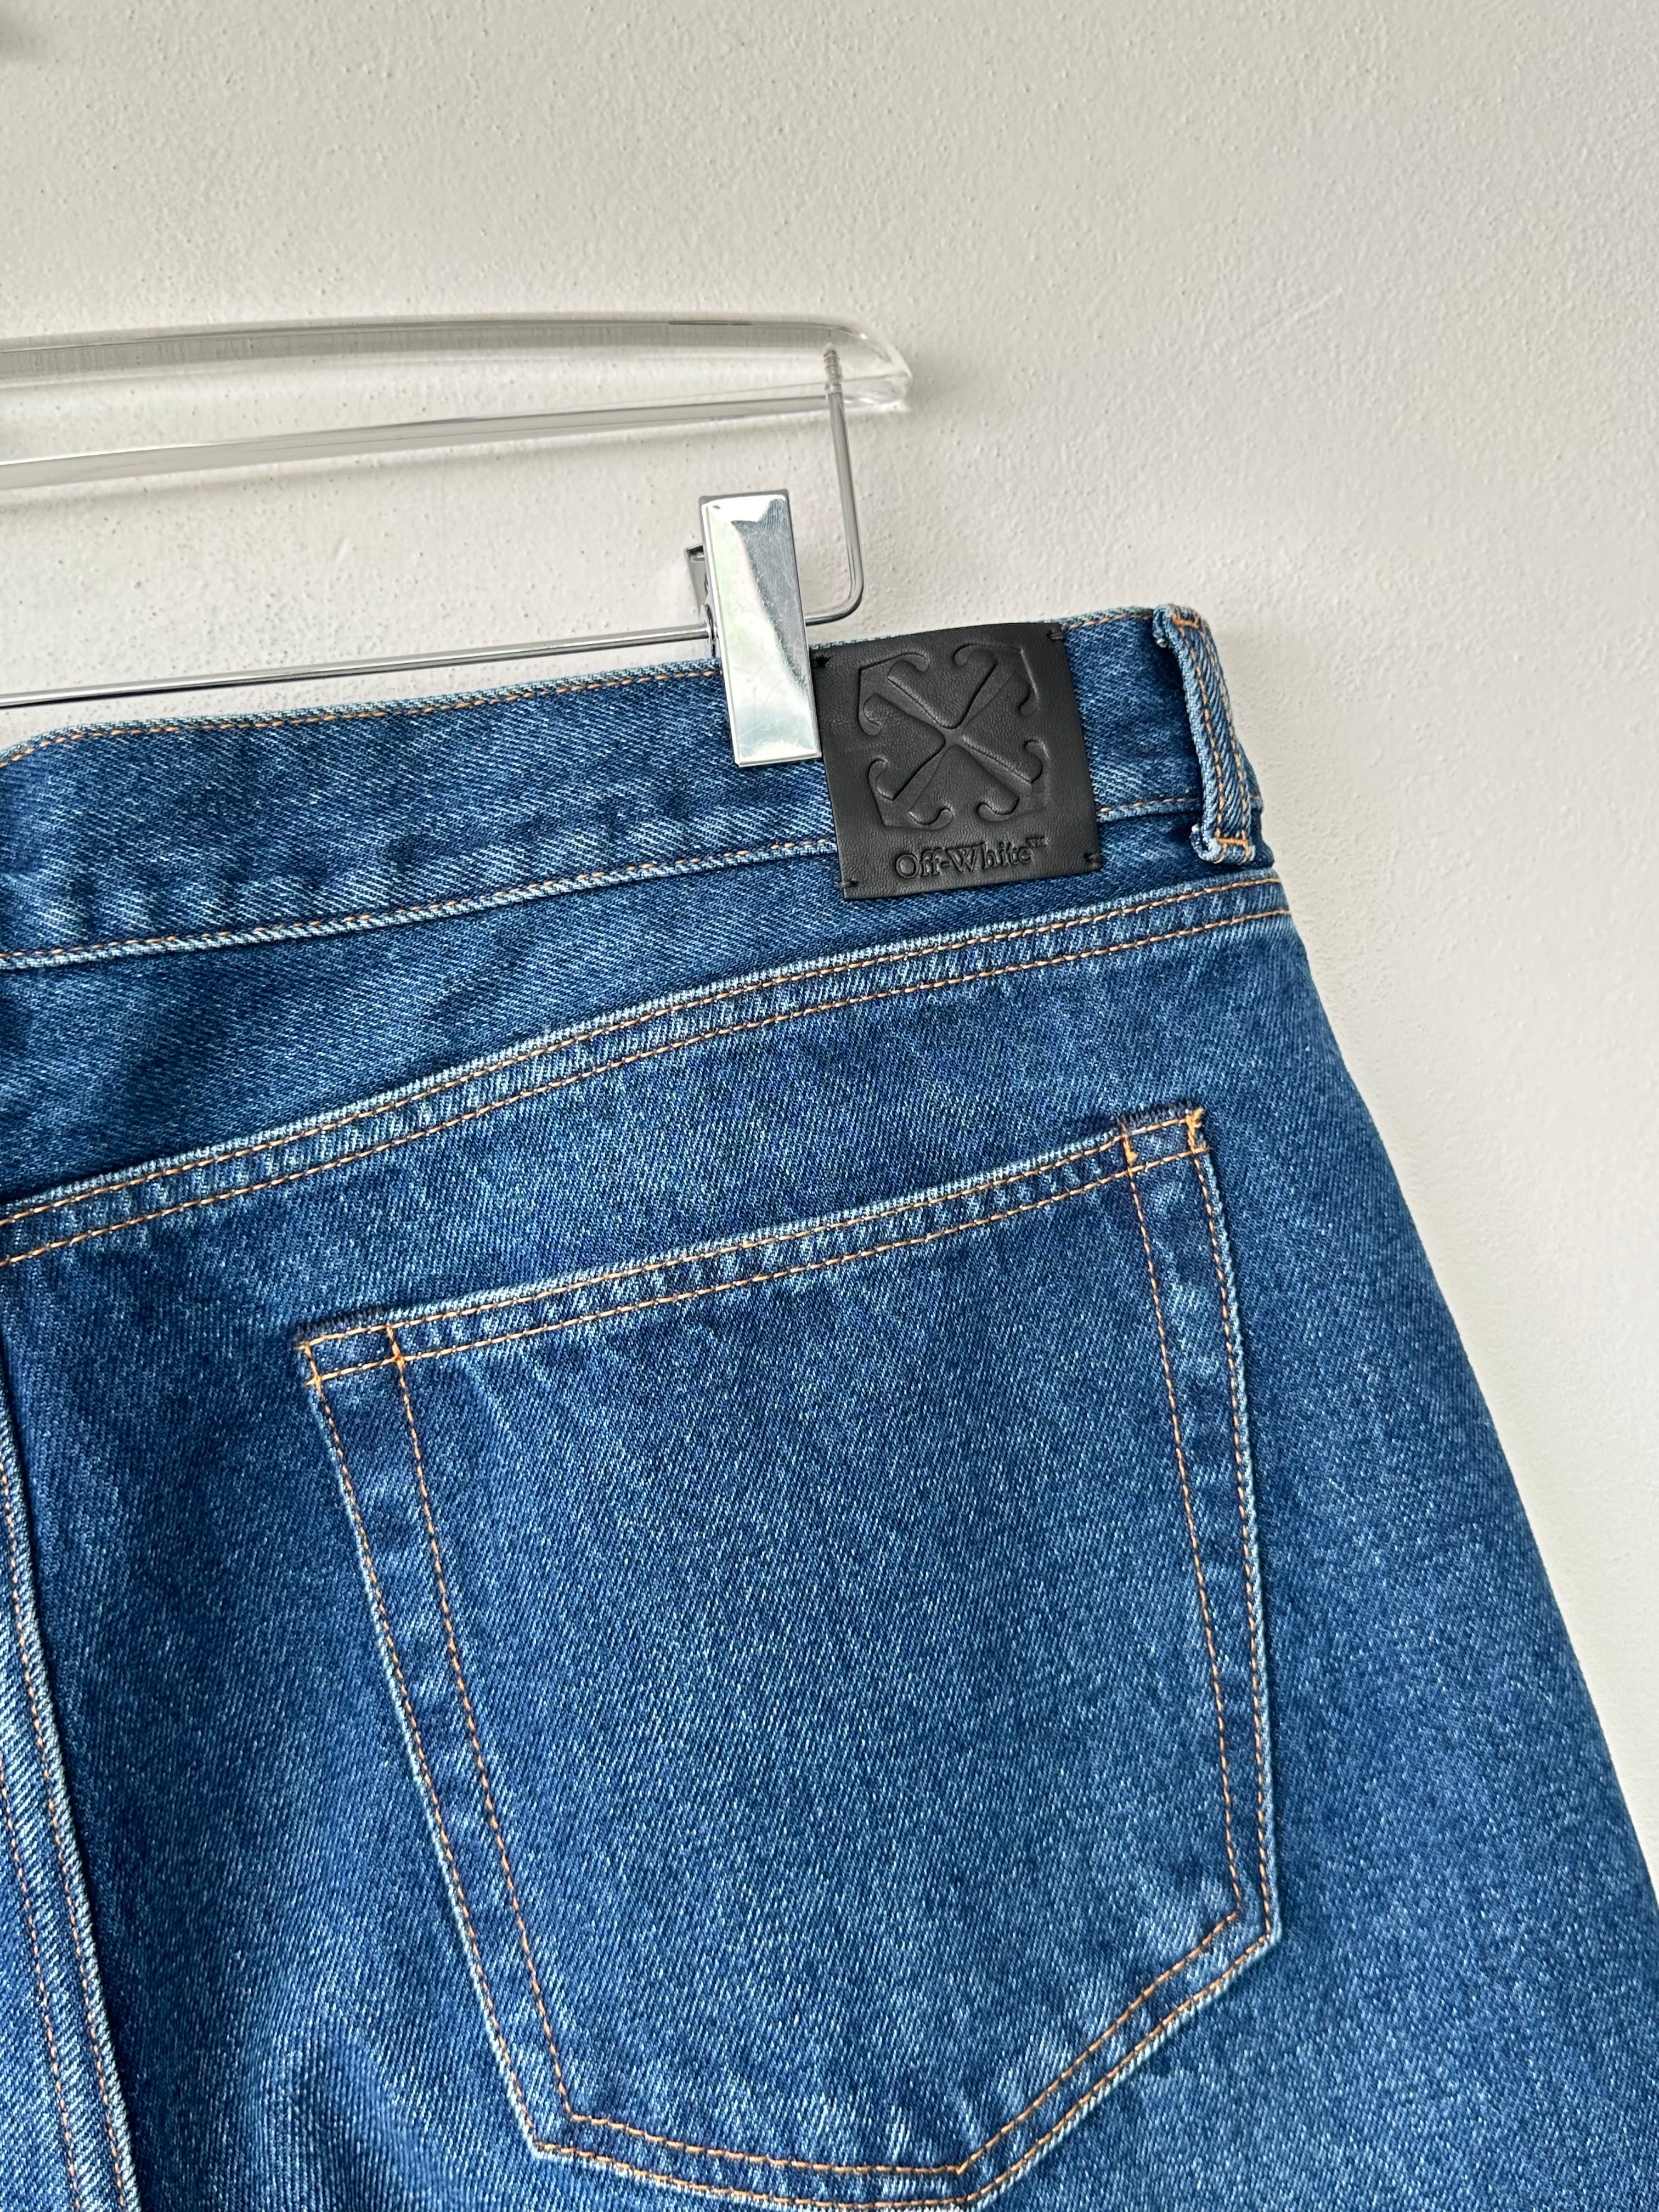 Jeans Zipper Detail